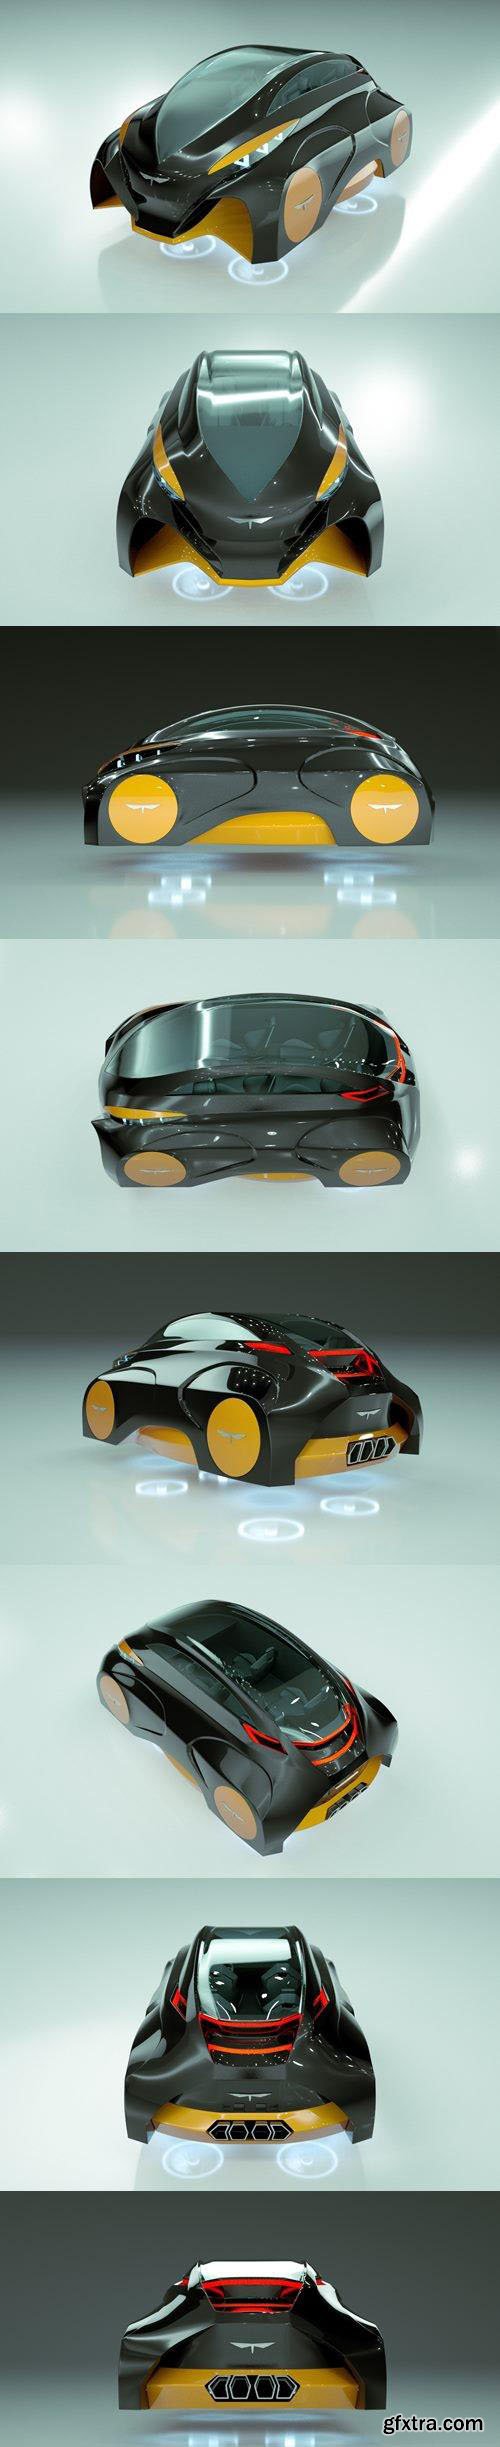 Cheap & Cool T-Hover Car 09 - 3D Model